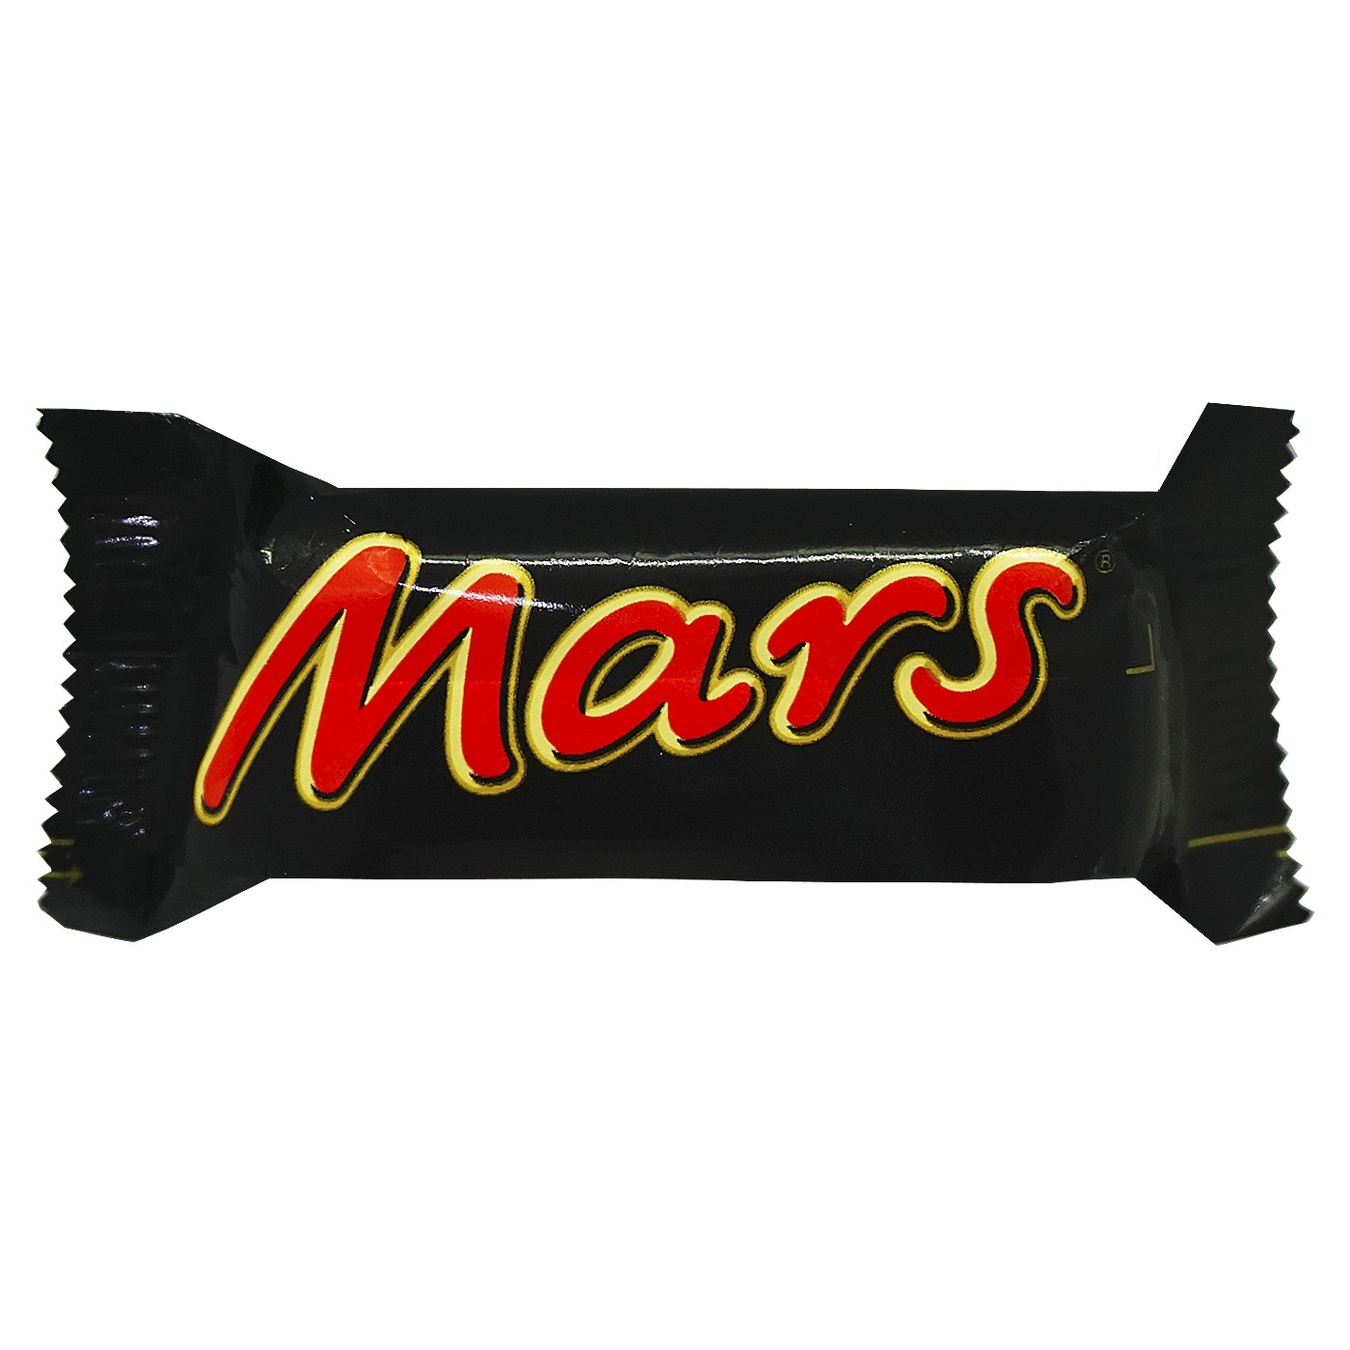 Цукерки Mars ваг